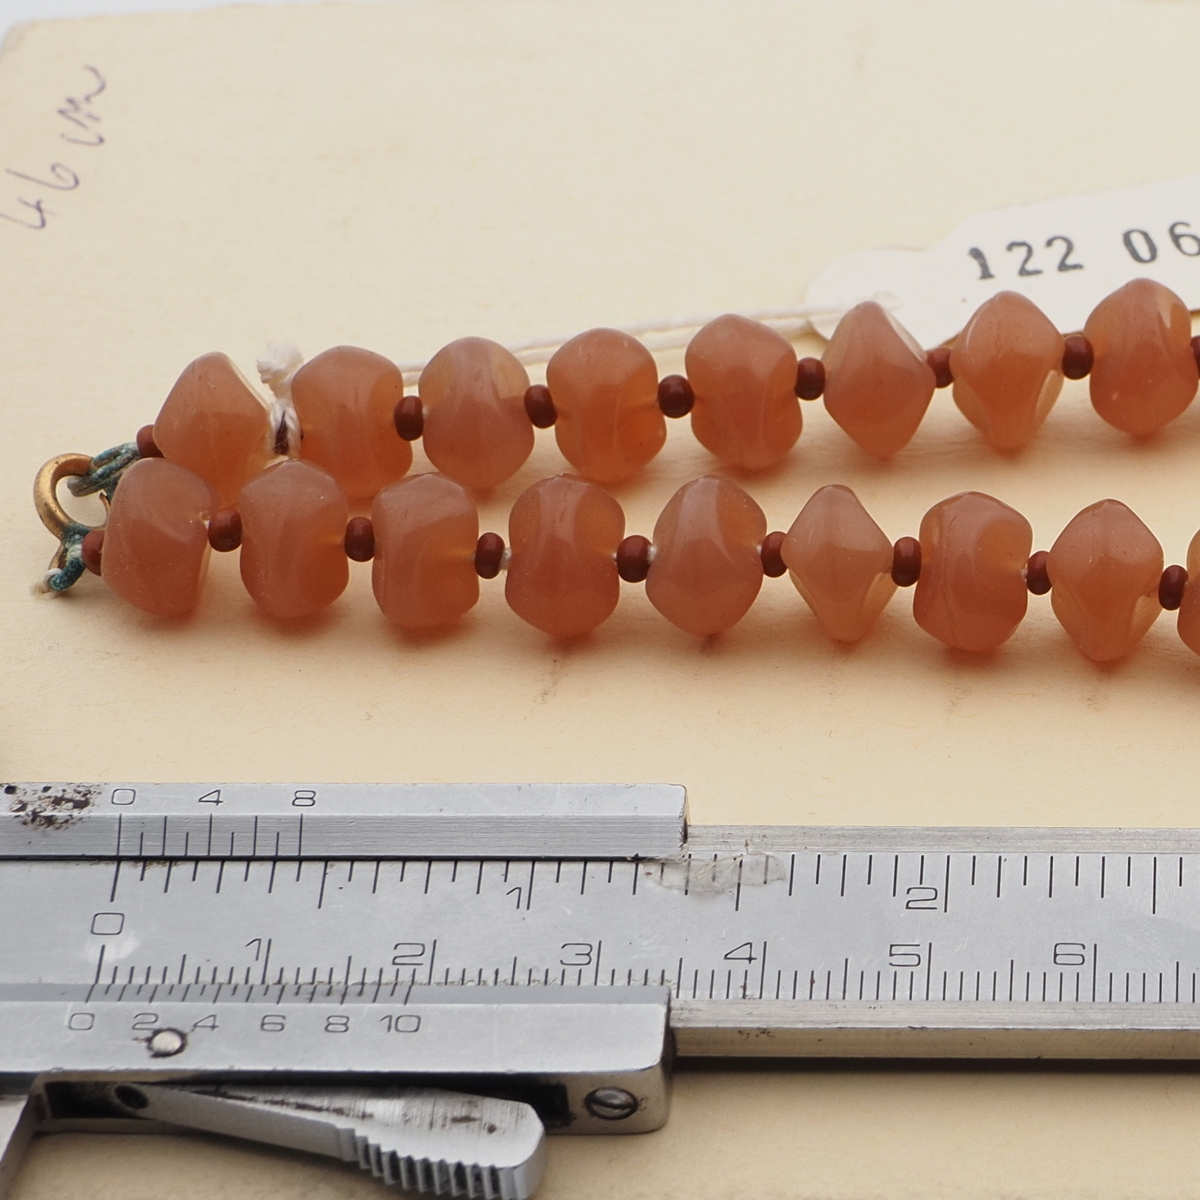 Vintage Czech necklace topaz opaline nugget glass beads 18"